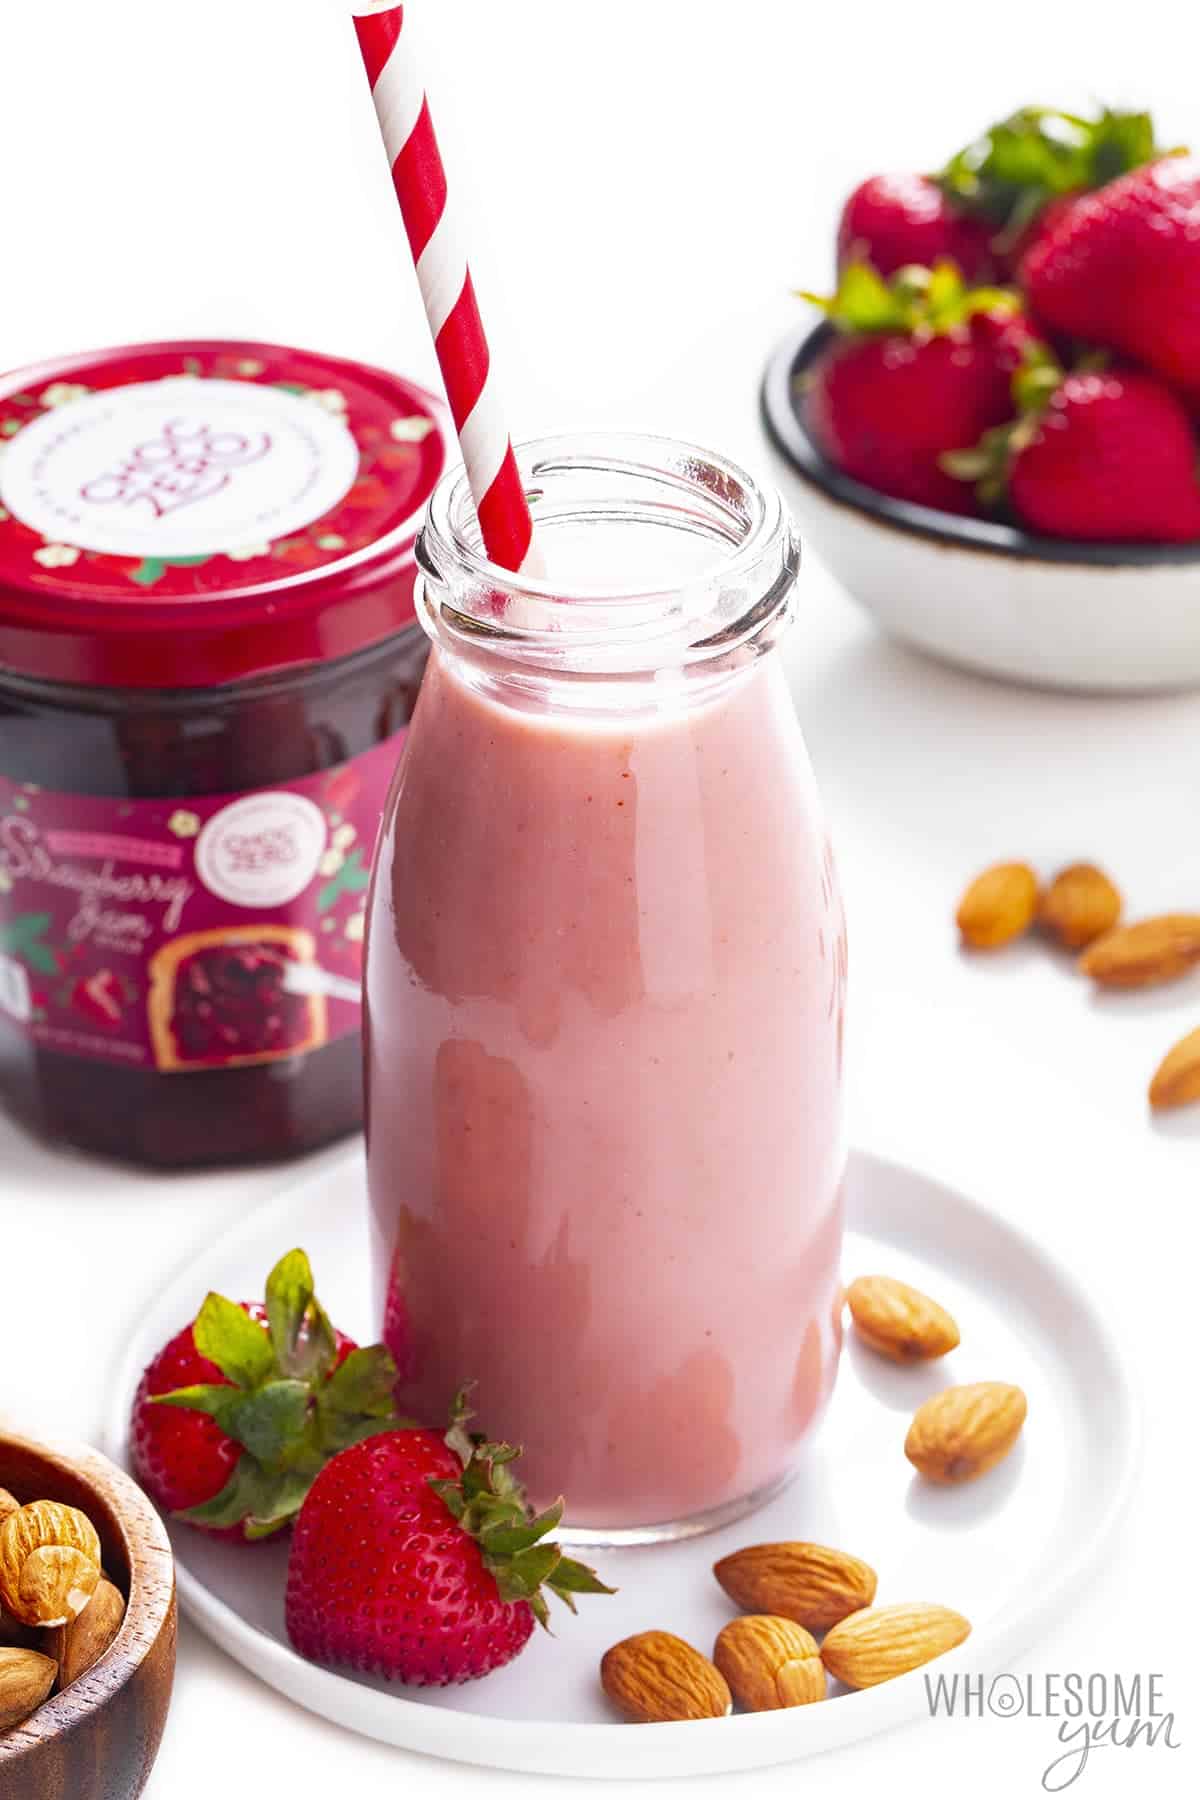 Strawberry almond milk in a glass bottle with straw and ChocZero strawberry preserves.